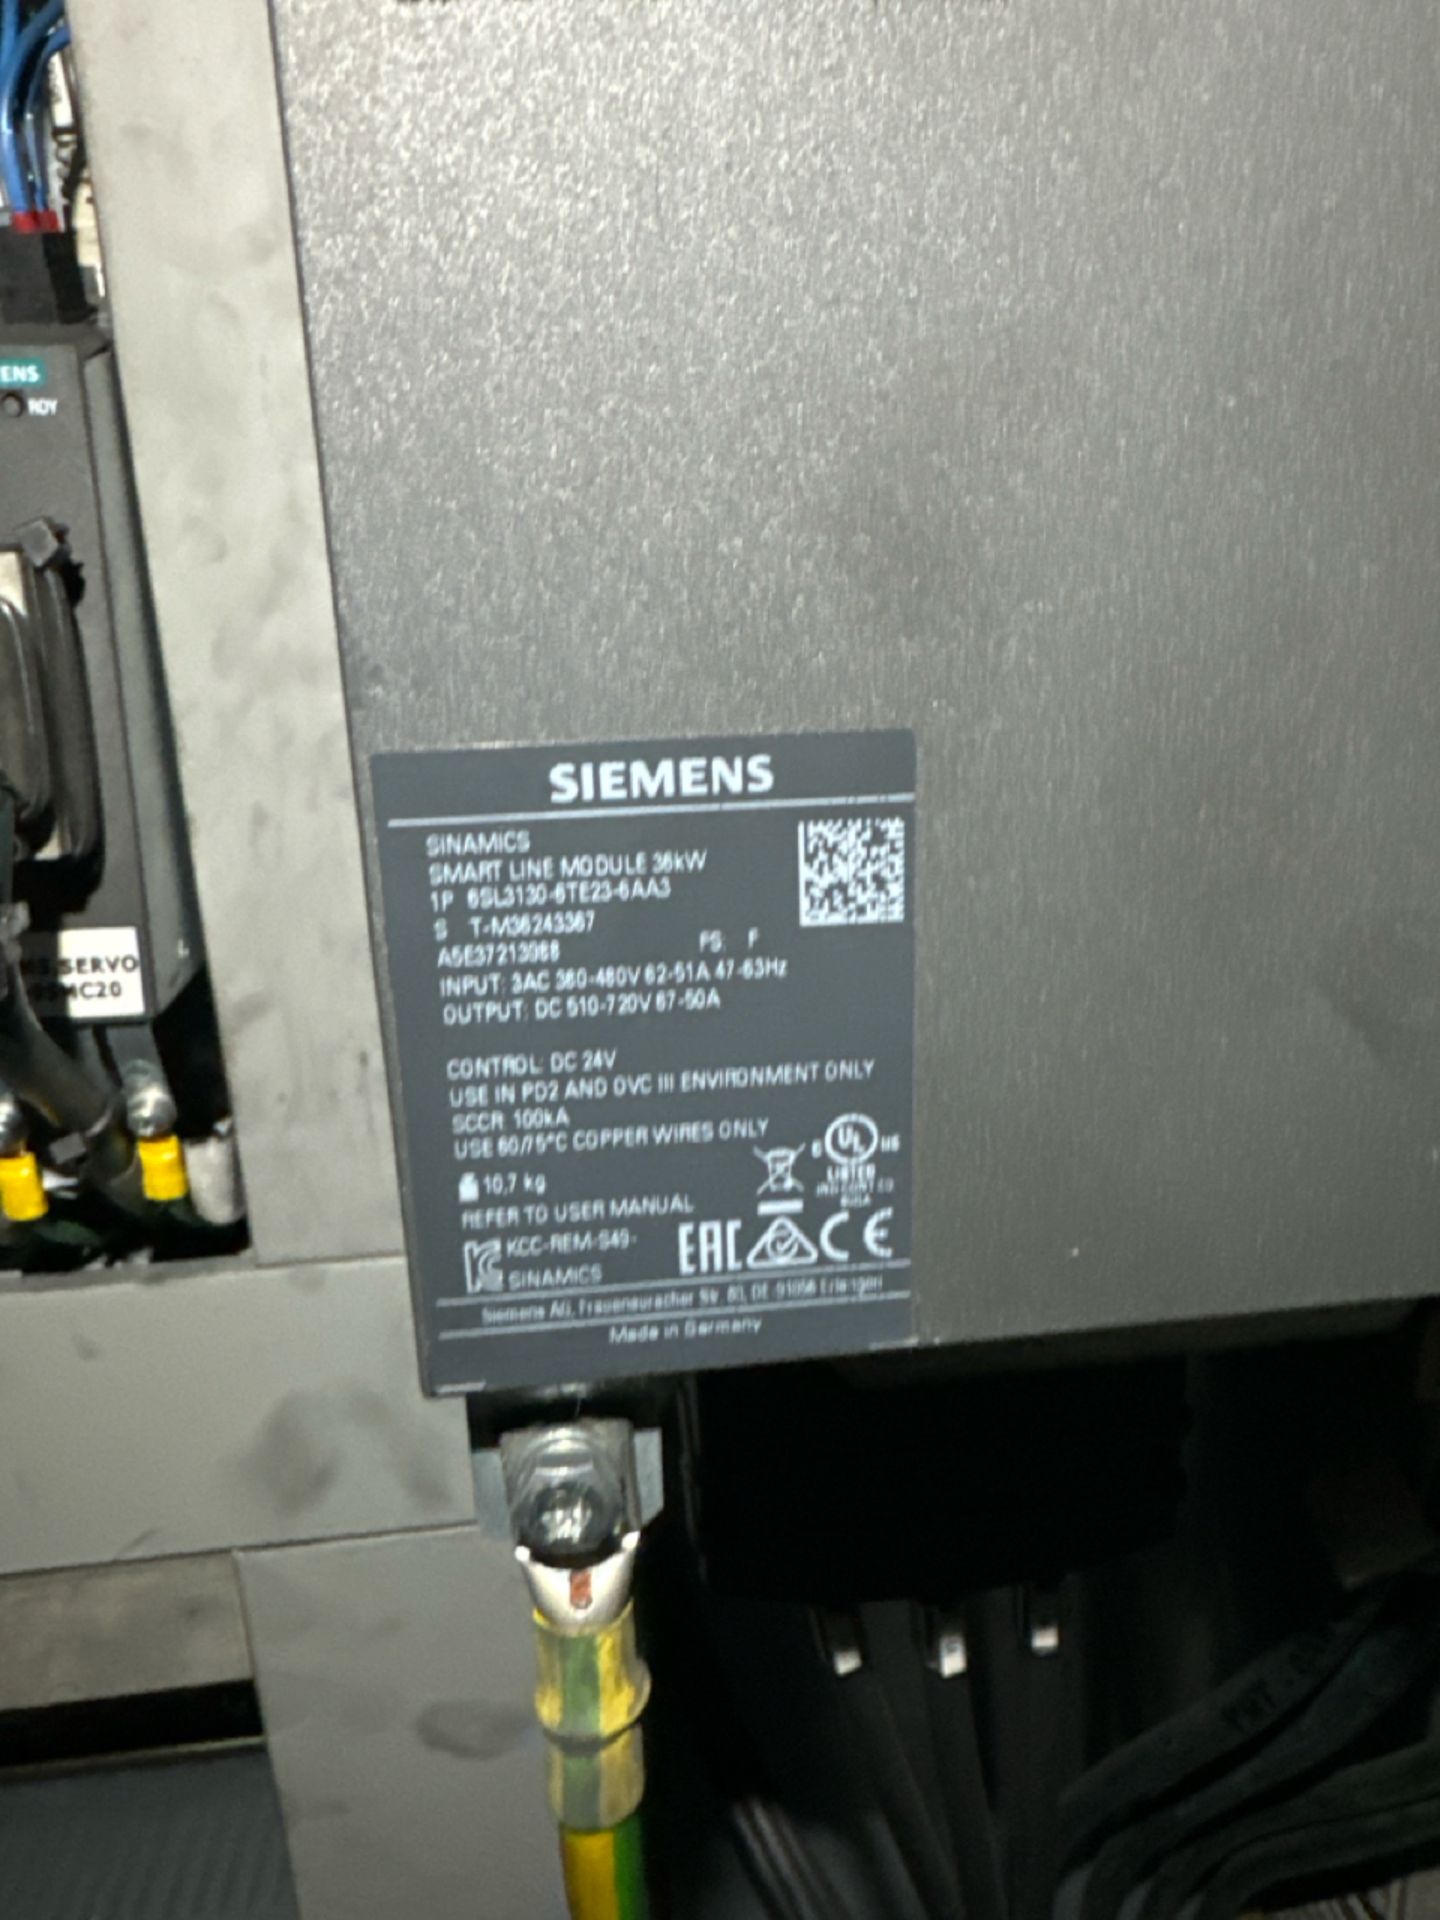 Siemens Sinamics Smart Line Module 36kW - Image 4 of 4